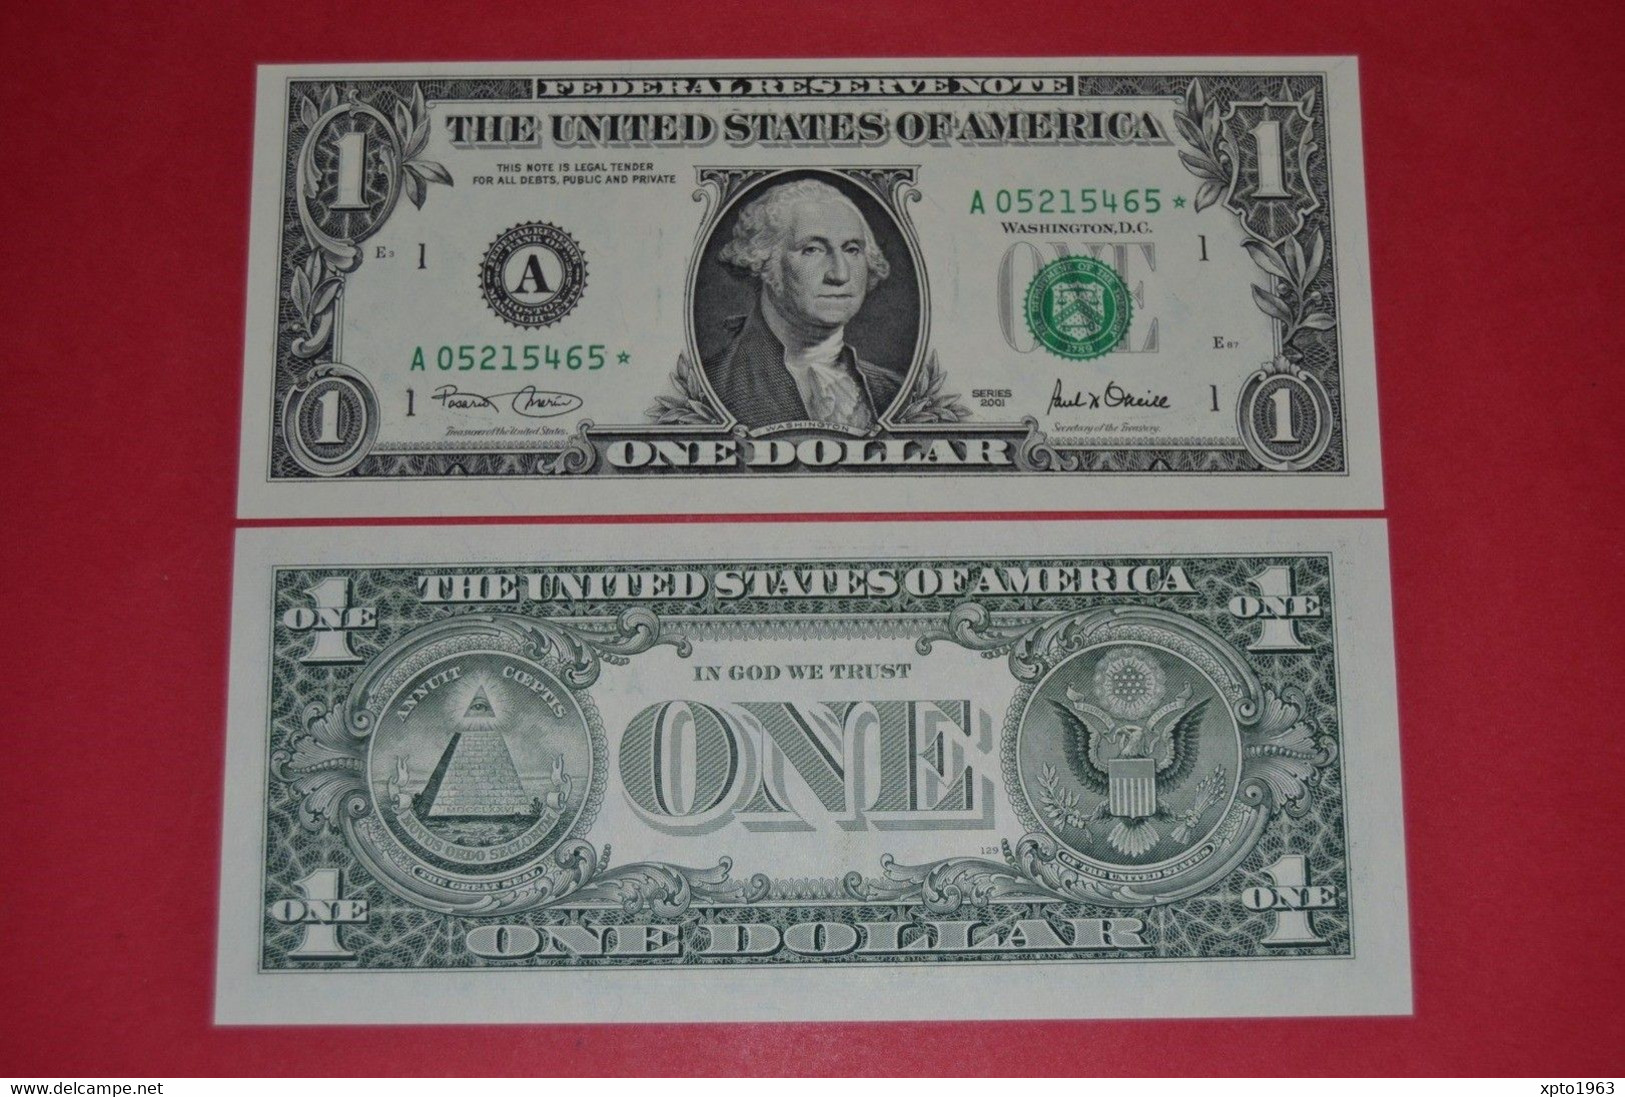 STAR NOTE USA $1 Dollar Bill 2001 - (A)  BOSTON, Crisp, UNCIRCULATED - Federal Reserve (1928-...)